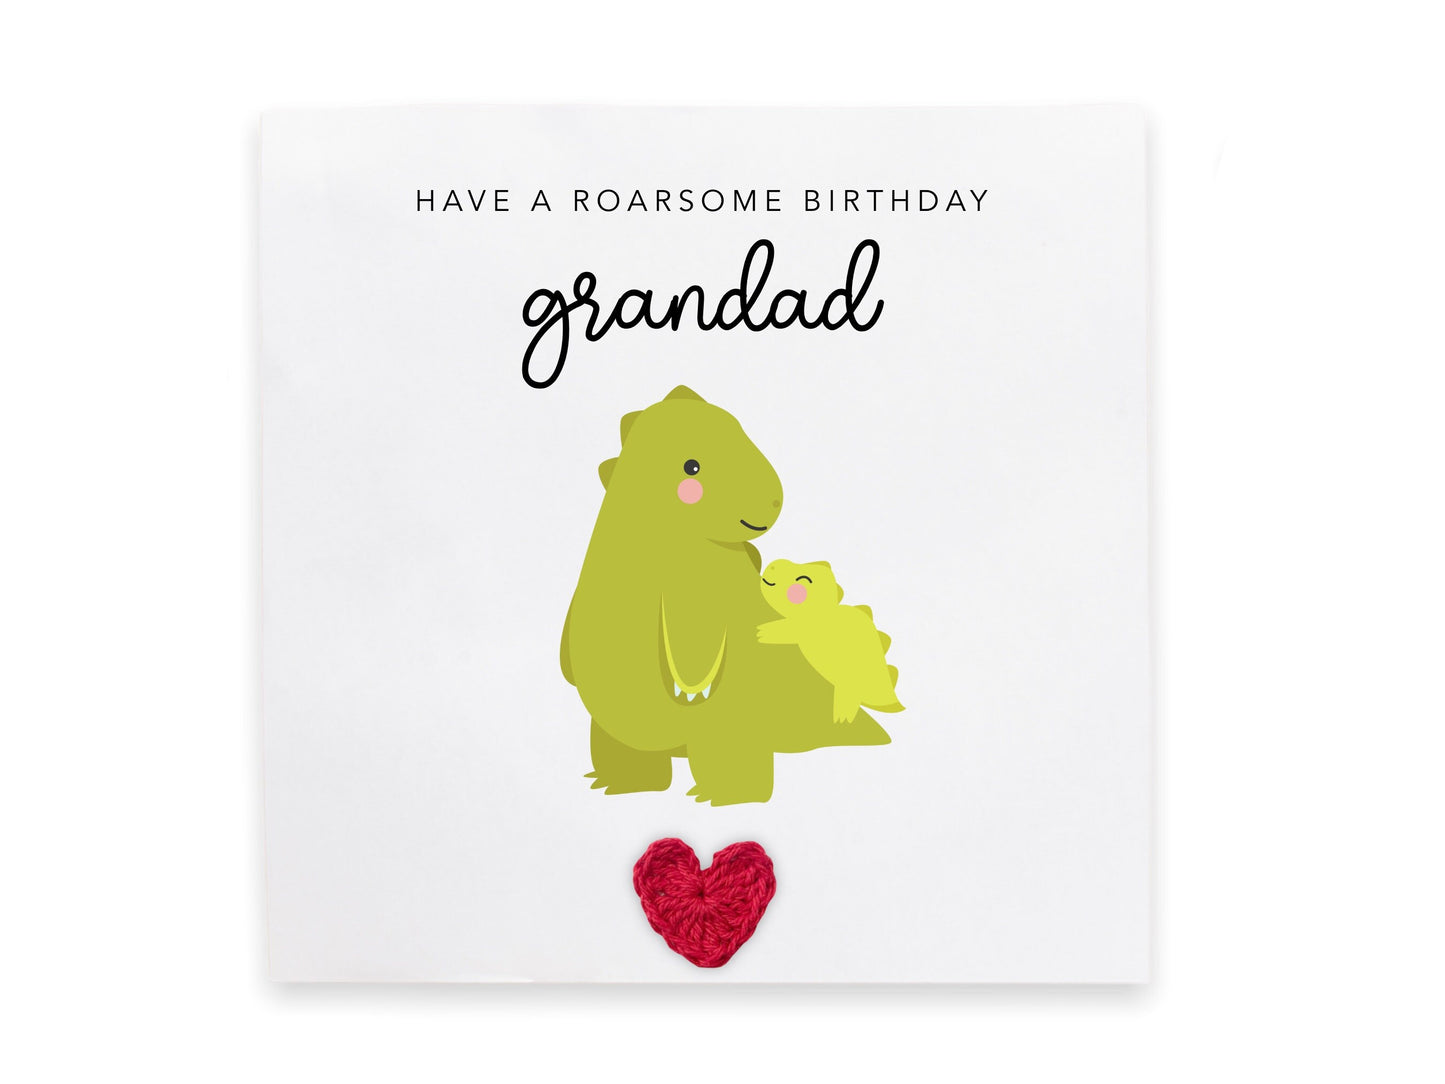 Happy Birthday Grandad Card, Daddy Birthday Card, Grandad Birthday Card From Grandson, Special Daddy Birthday Gift From Daughter, Dinosaur